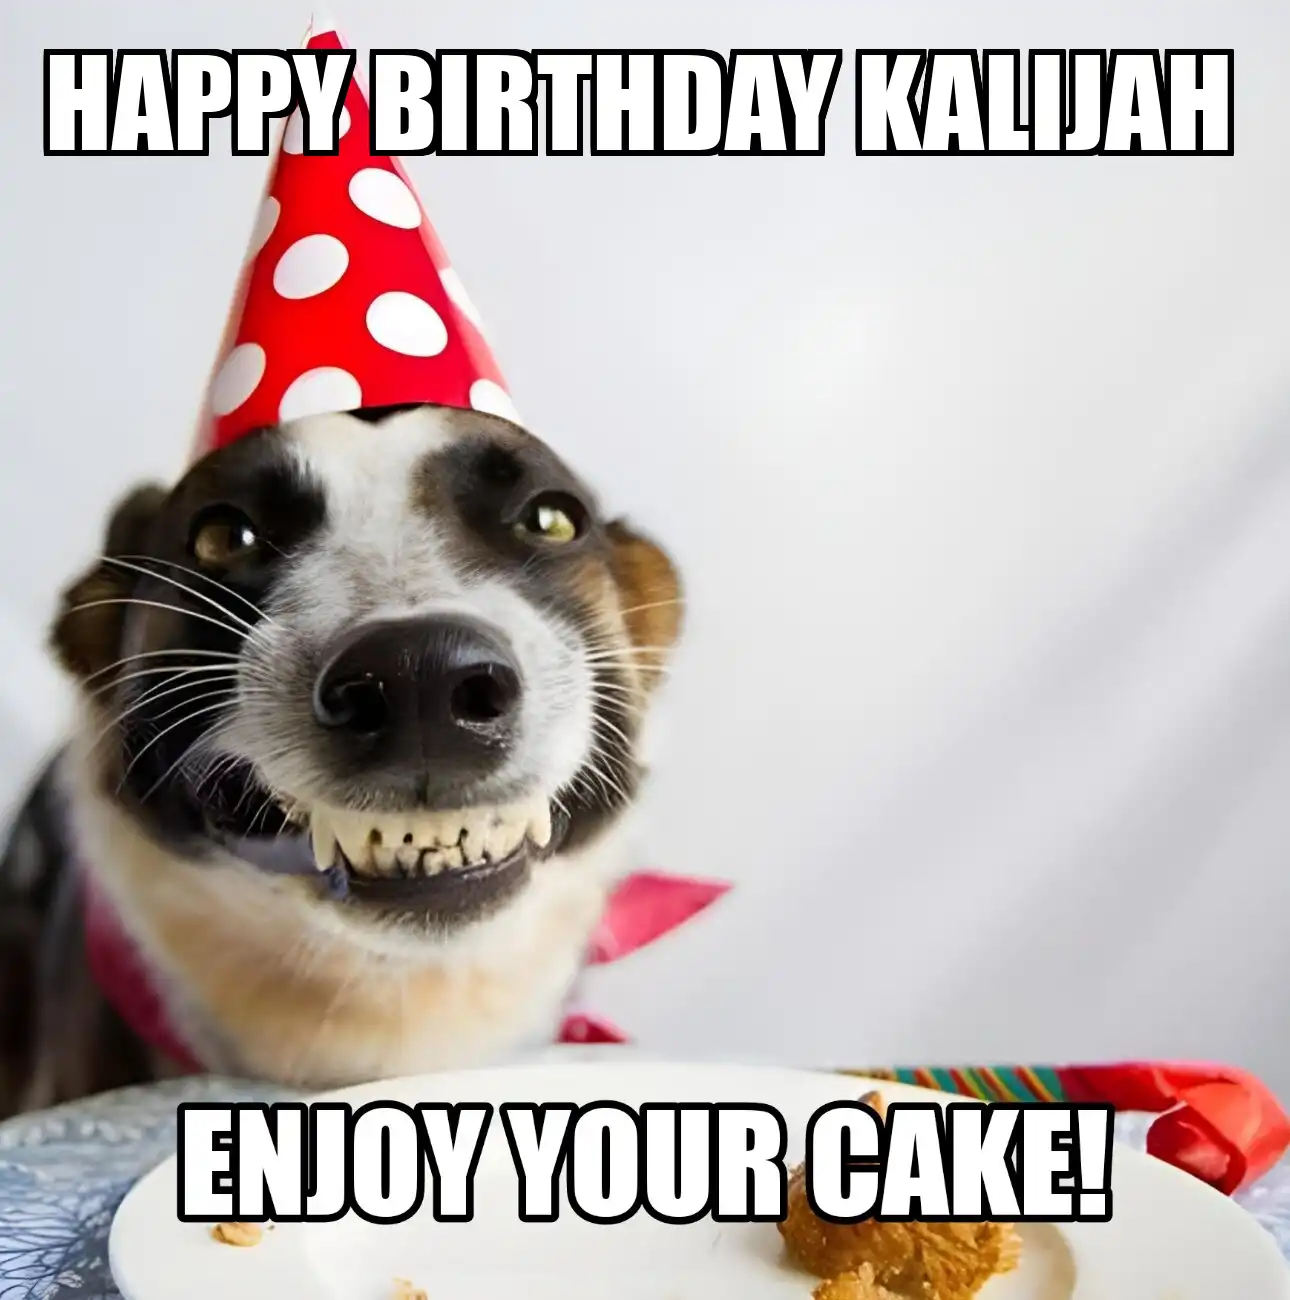 Happy Birthday Kalijah Enjoy Your Cake Dog Meme